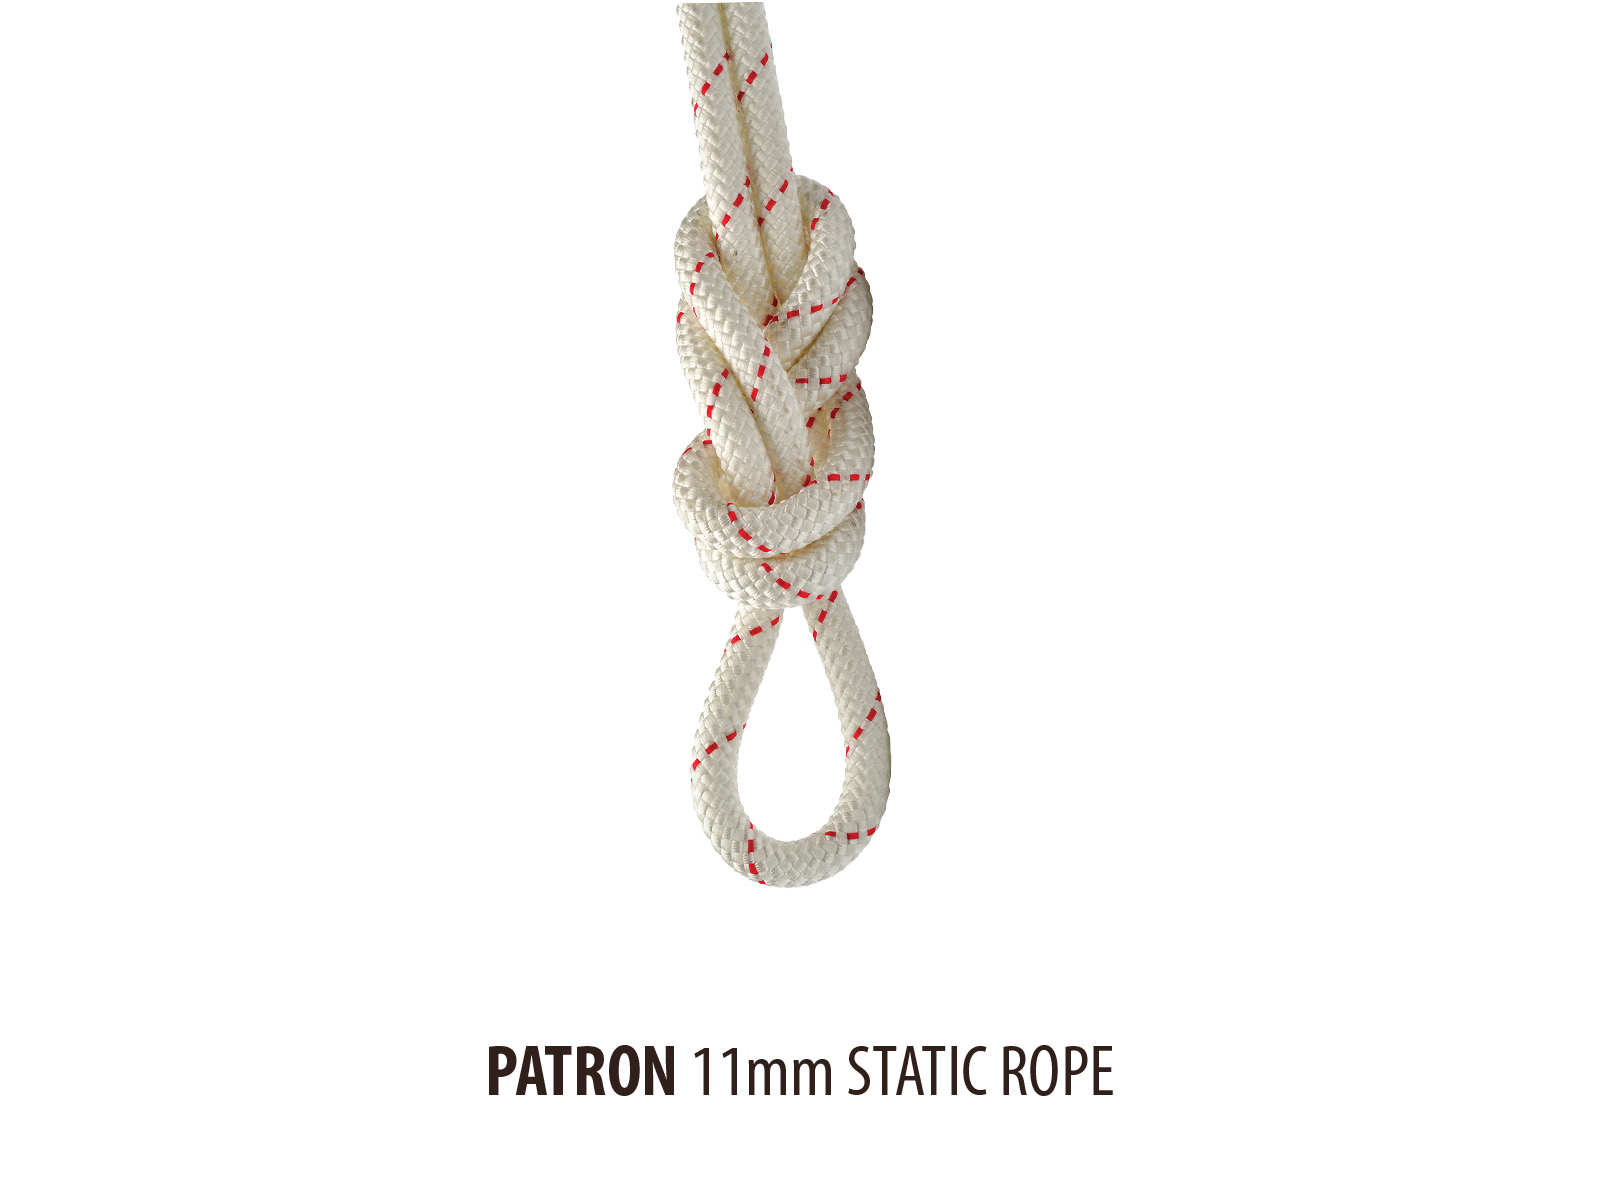 Patron static rope